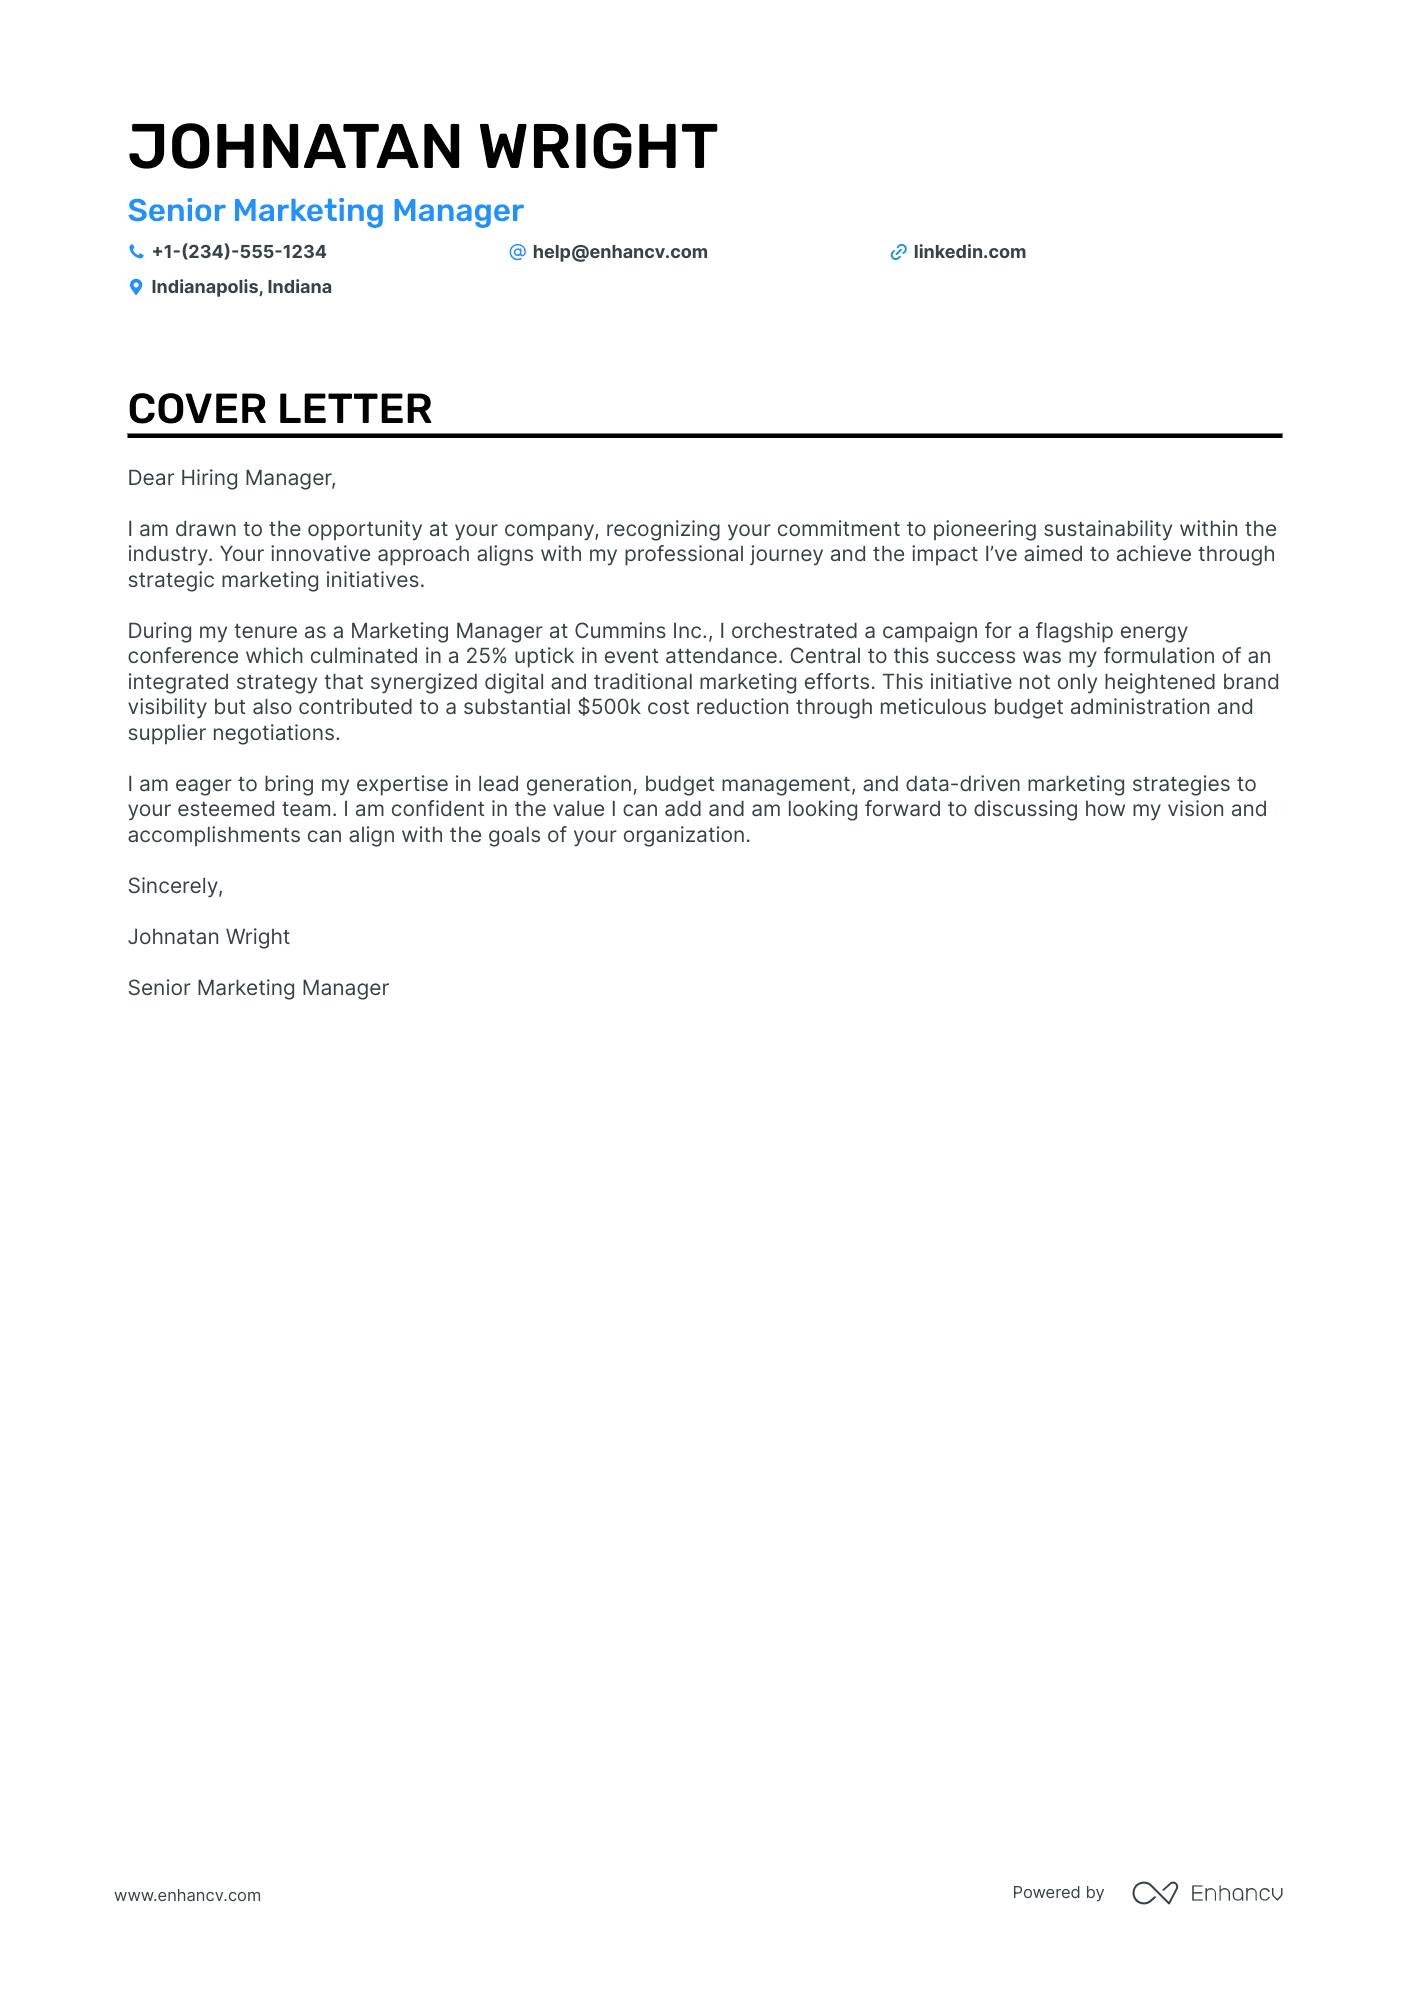 cover letter example for senior marketing manager